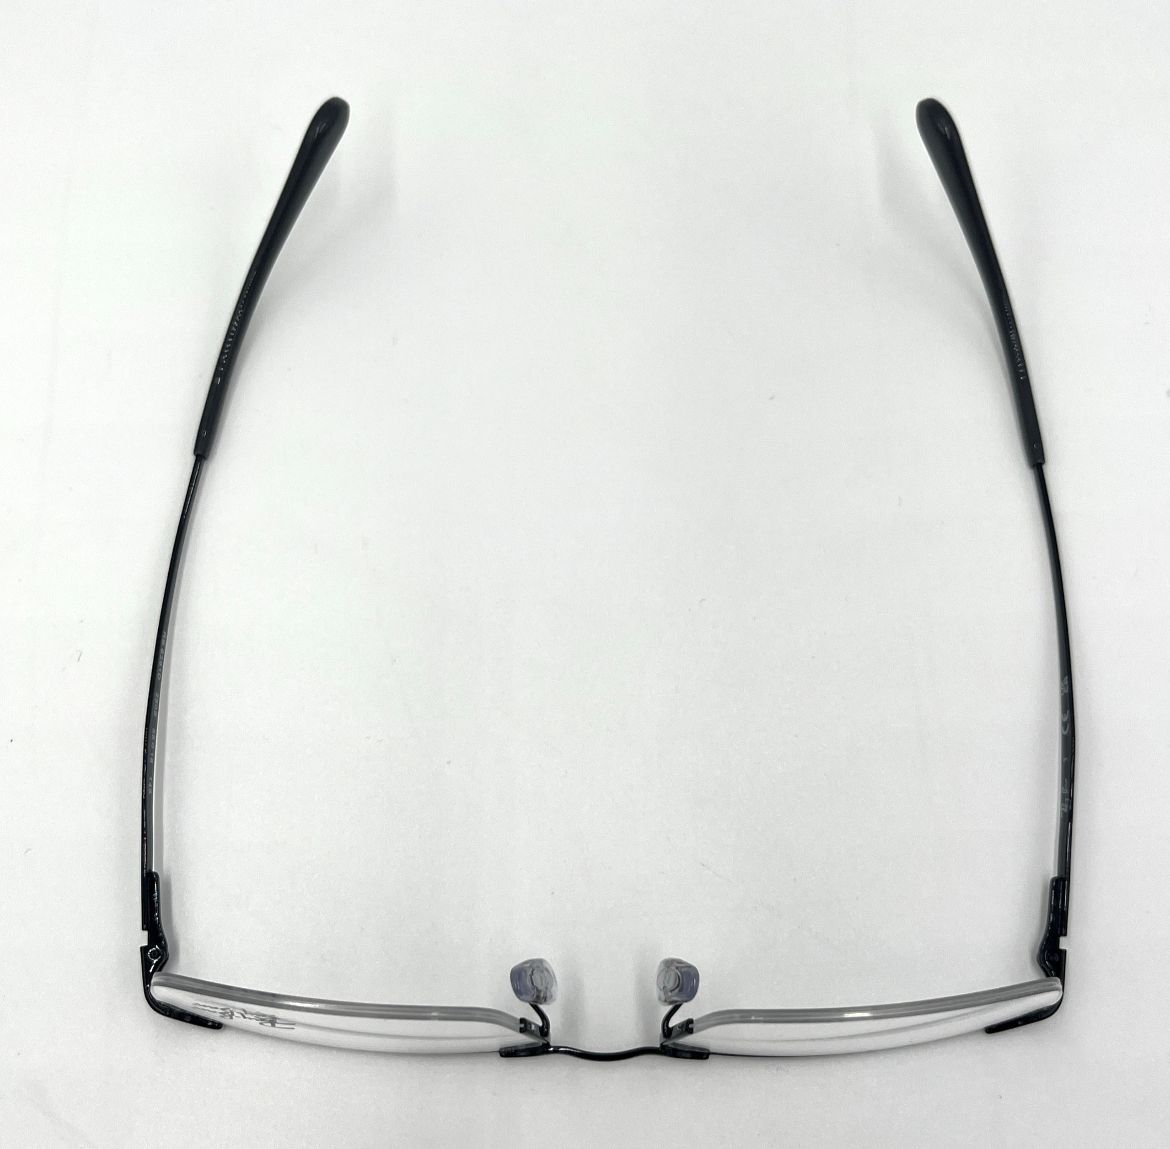 RayBan レイバン メガネ 眼鏡 フレーム メガネフレーム メンズ メタル